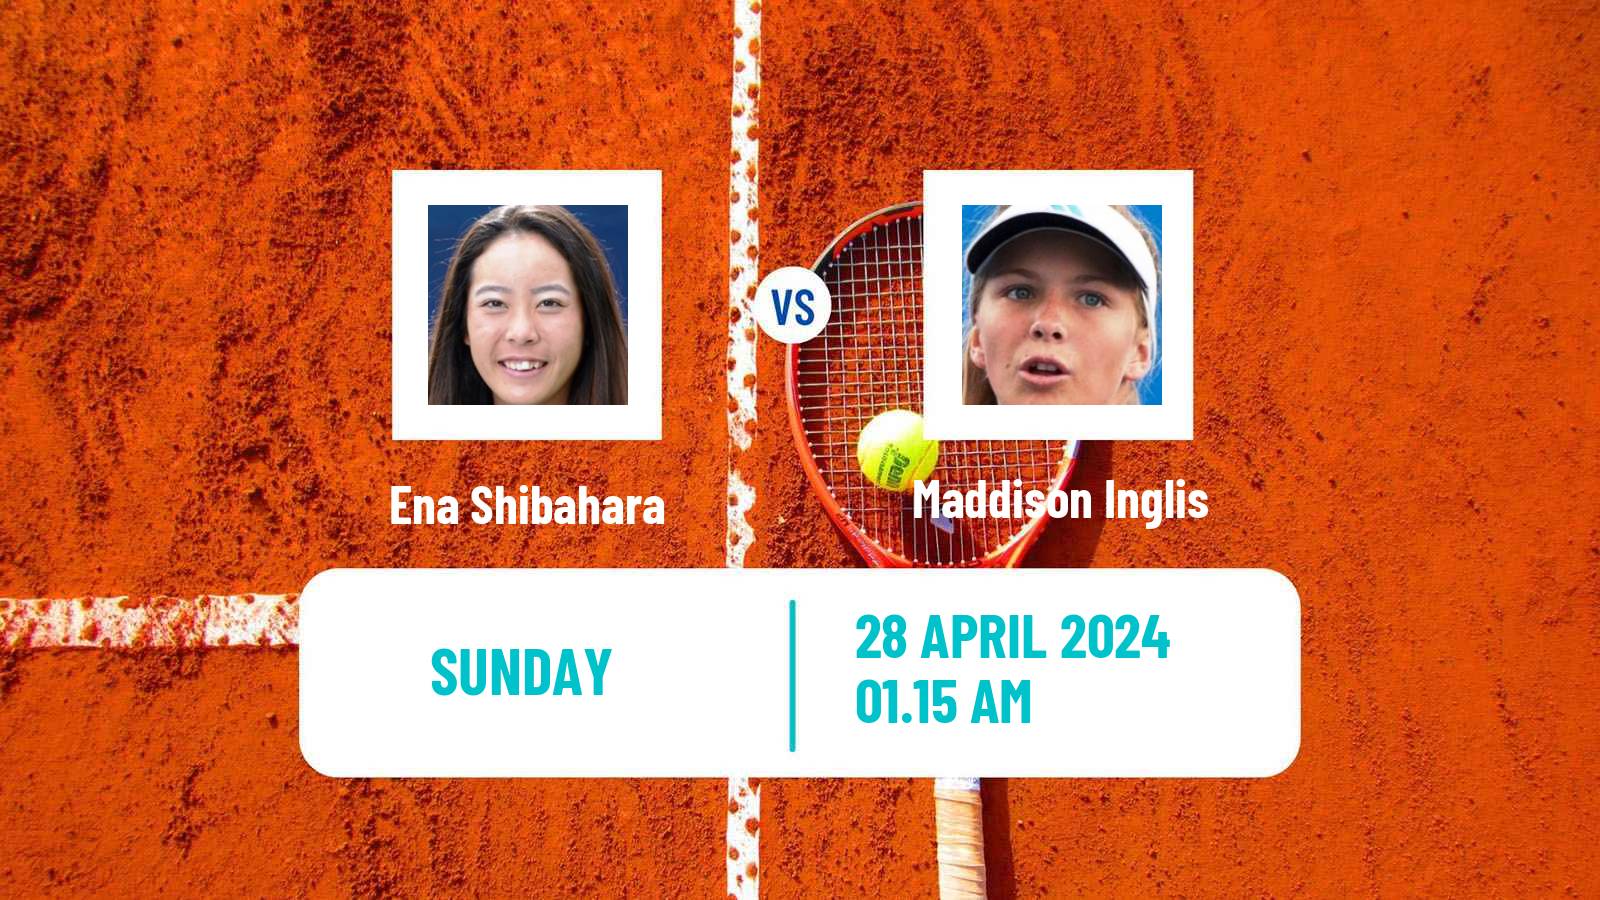 Tennis ITF W100 Tokyo Women Ena Shibahara - Maddison Inglis